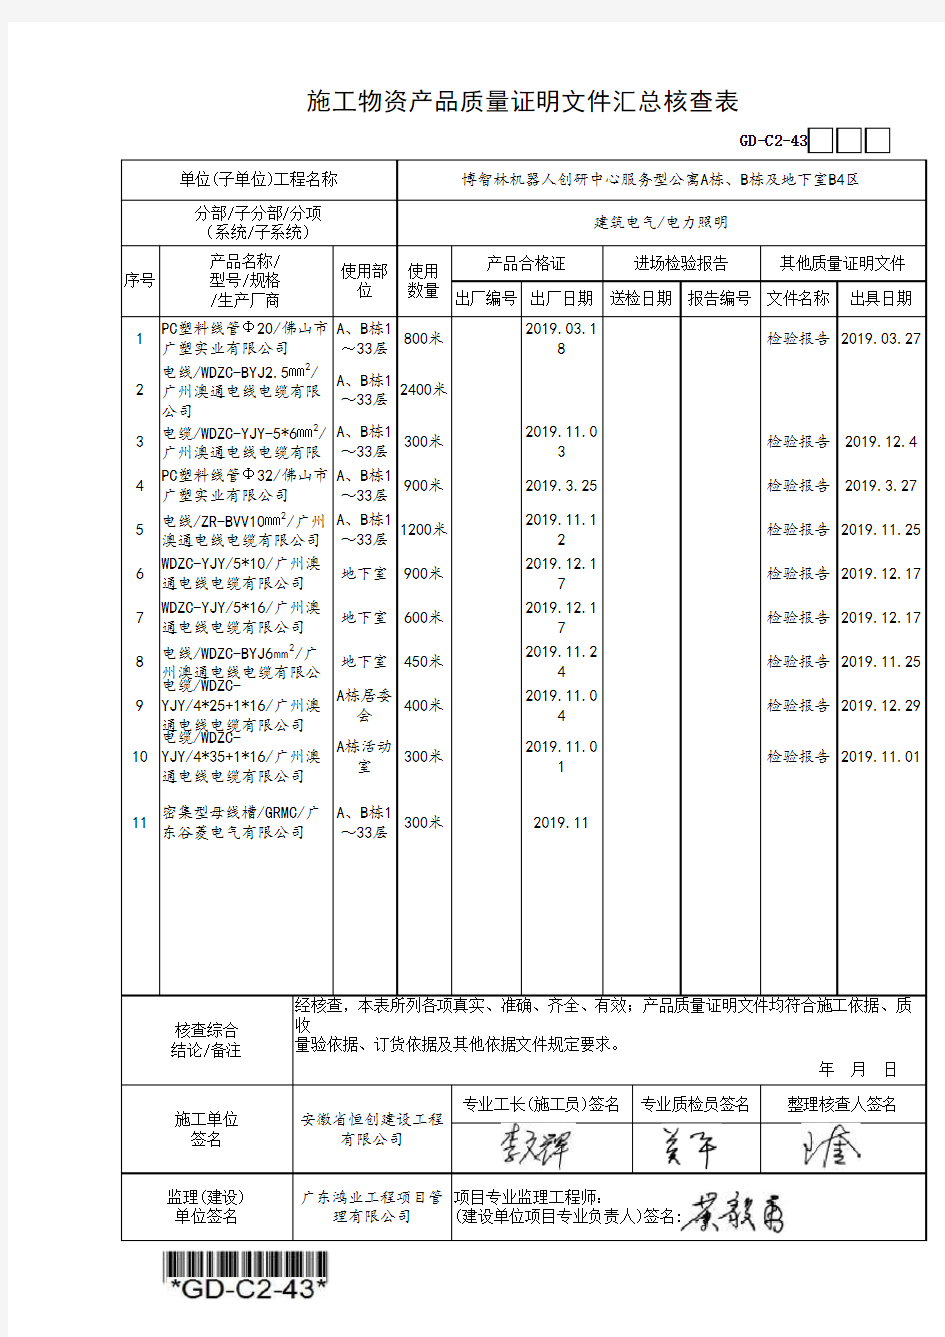 (GD-C2-43)施工物资产品质量证明文件汇总核查表(强电分部范例)